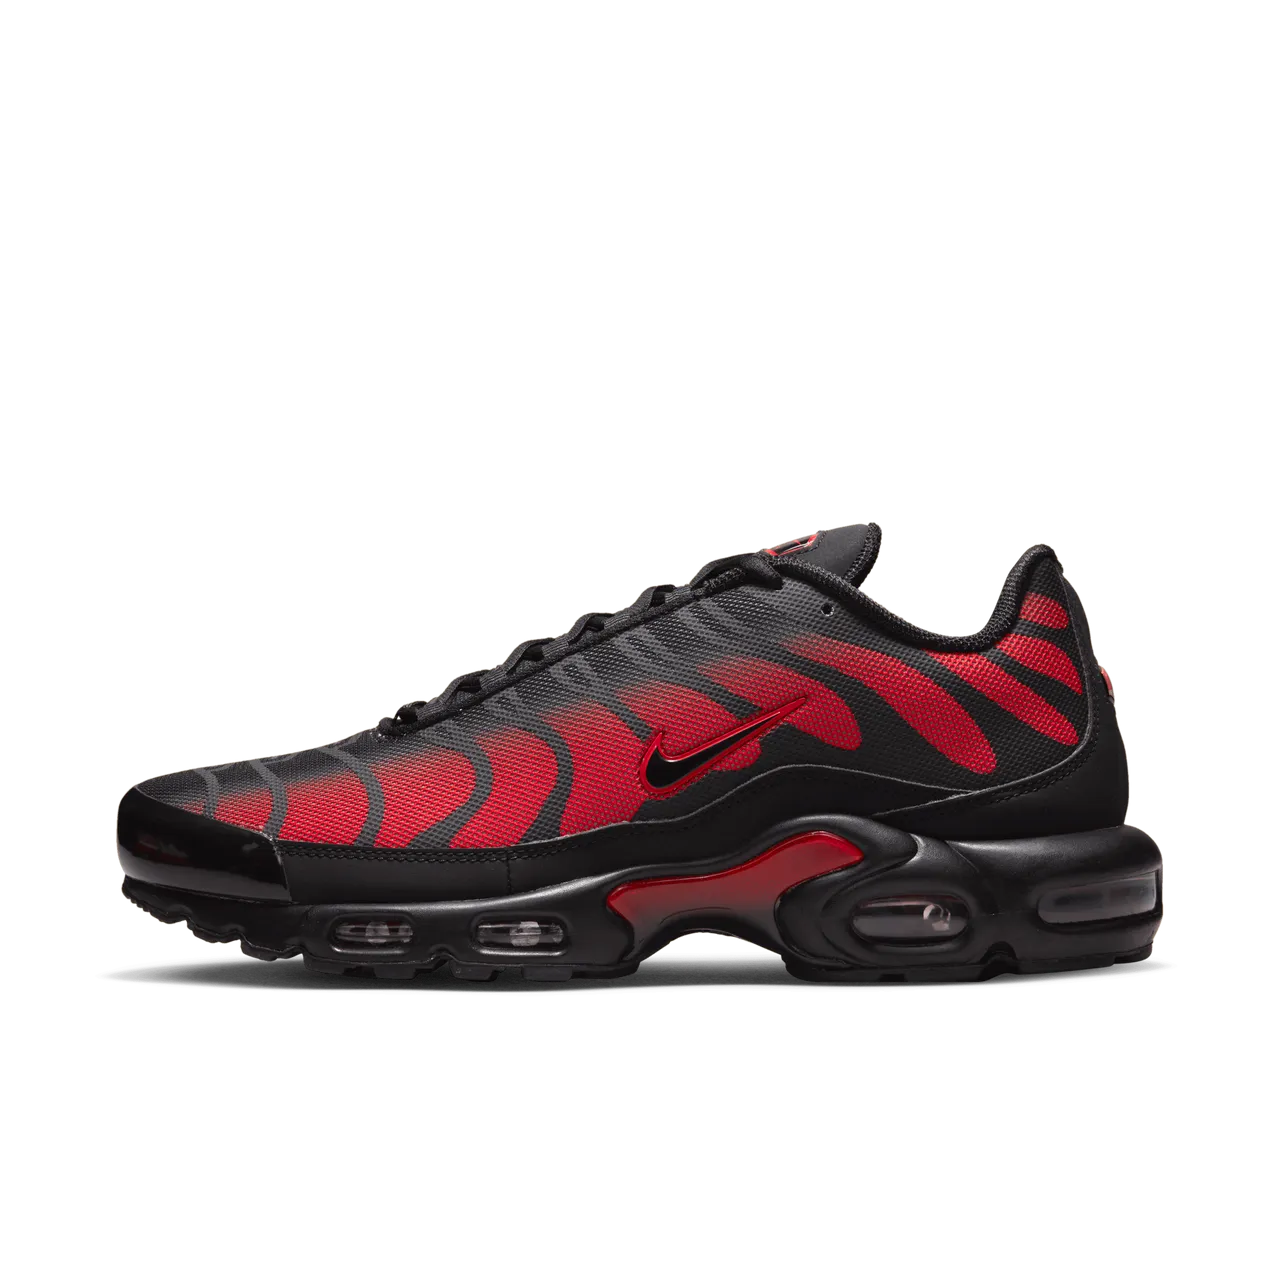 Nike Air Max Plus Men's Shoes - Red